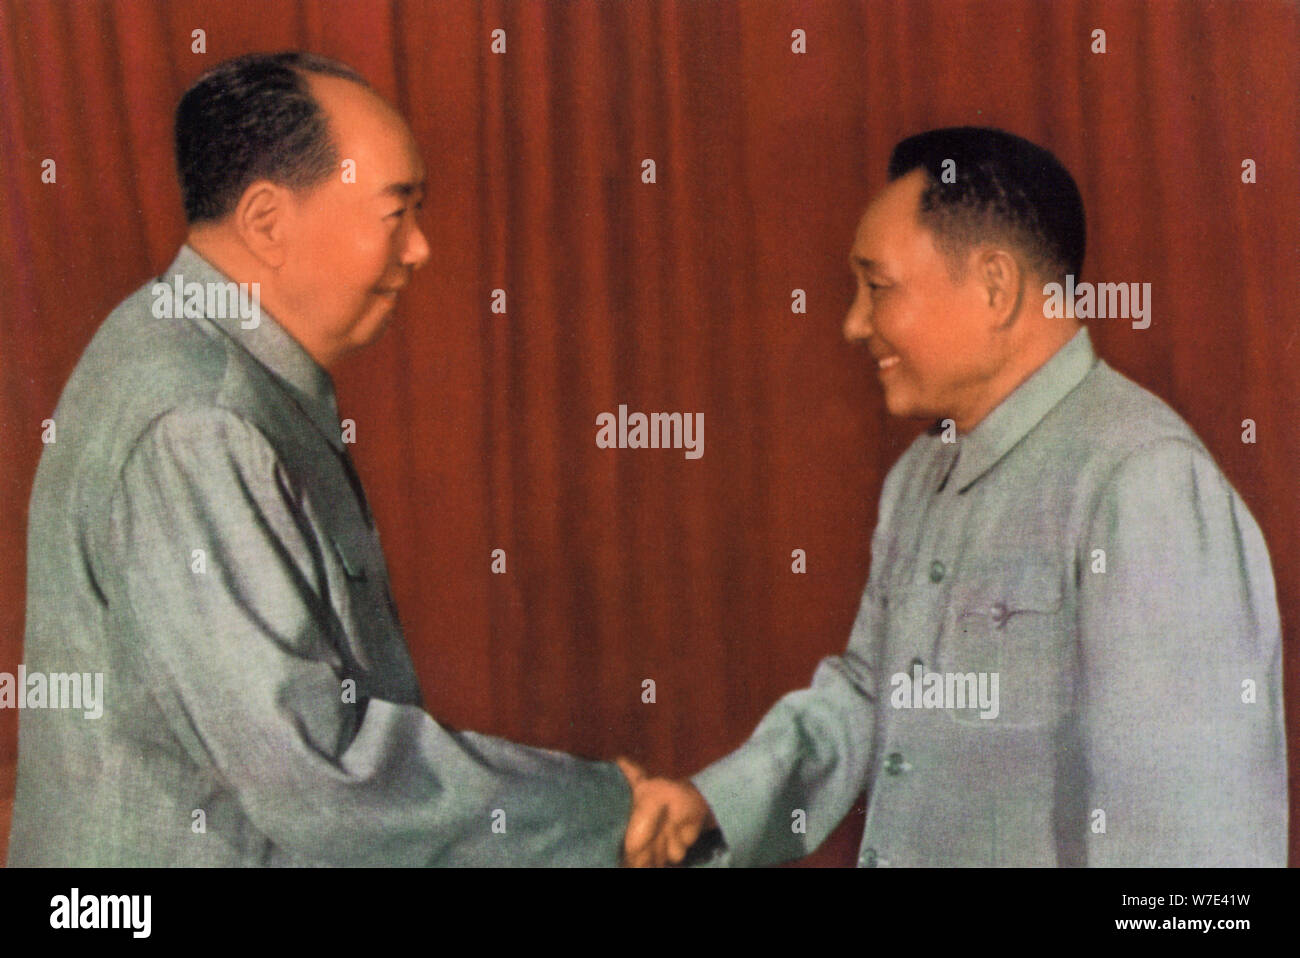 Mao Zedong et Deng Xiaoping, les dirigeants communistes chinois, c1960s( ?). Artiste : Inconnu Banque D'Images